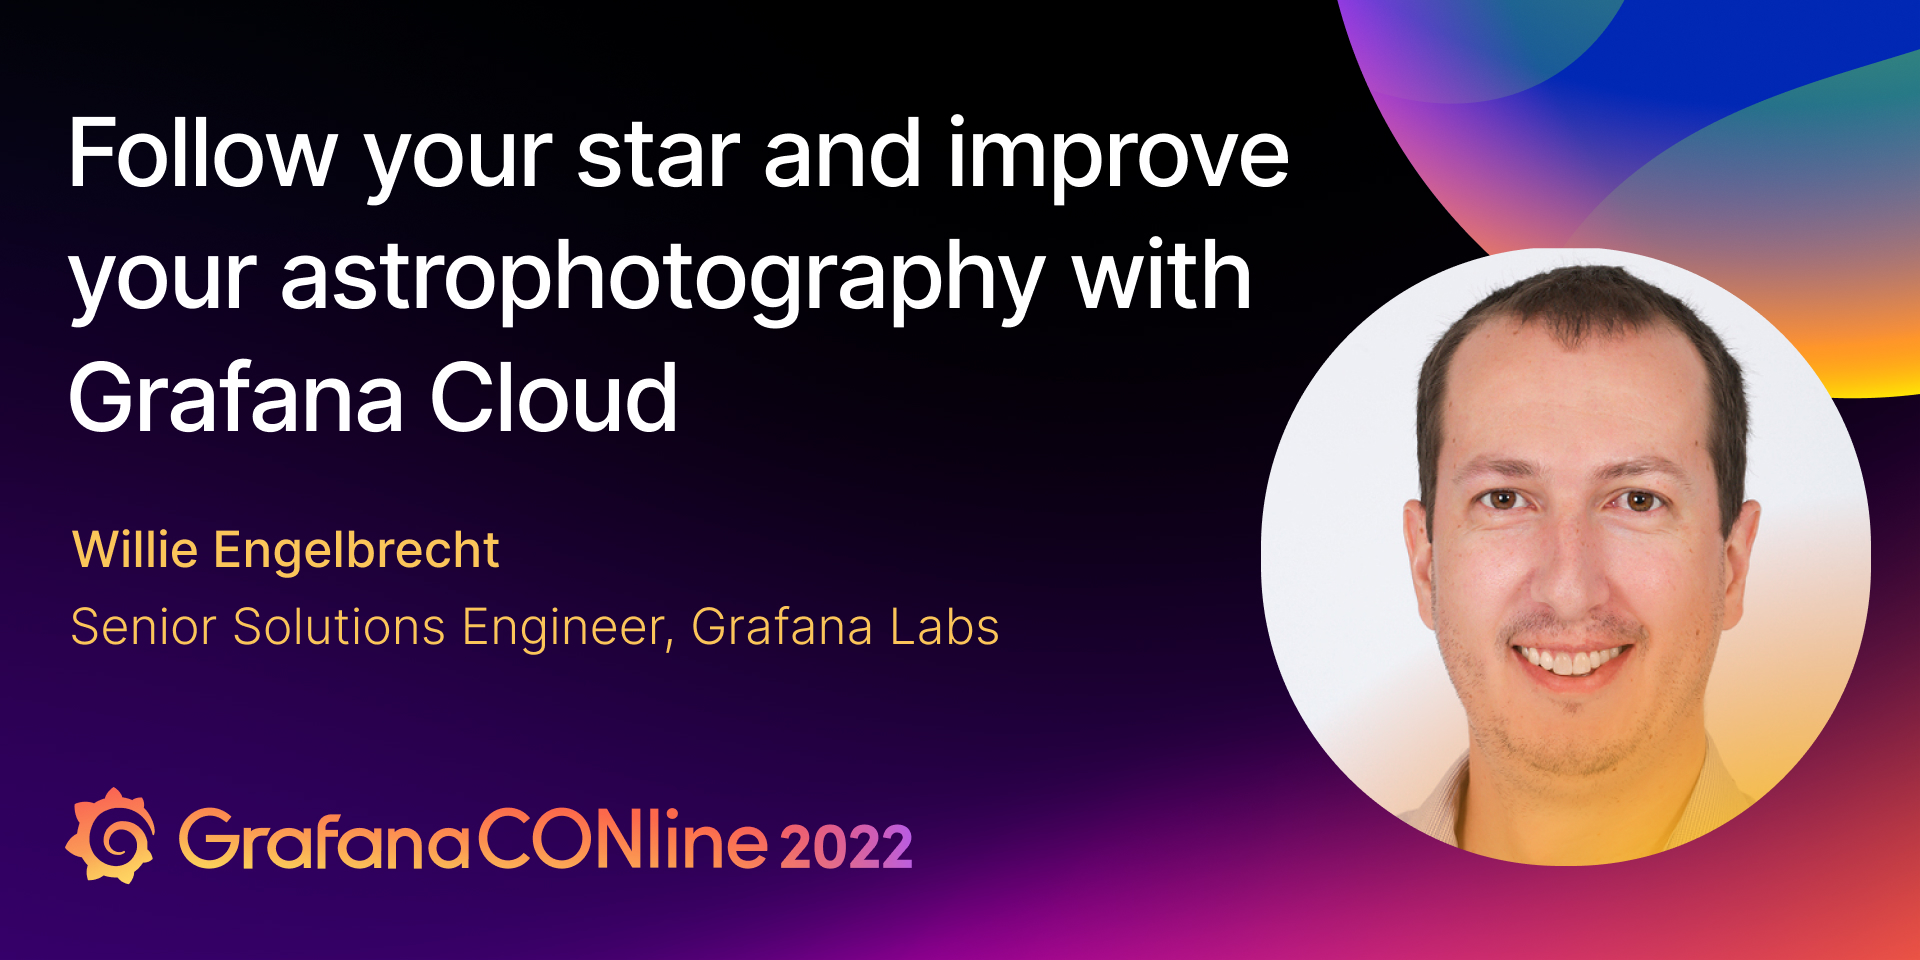 2022年GrafanaCONline天文摄影会议